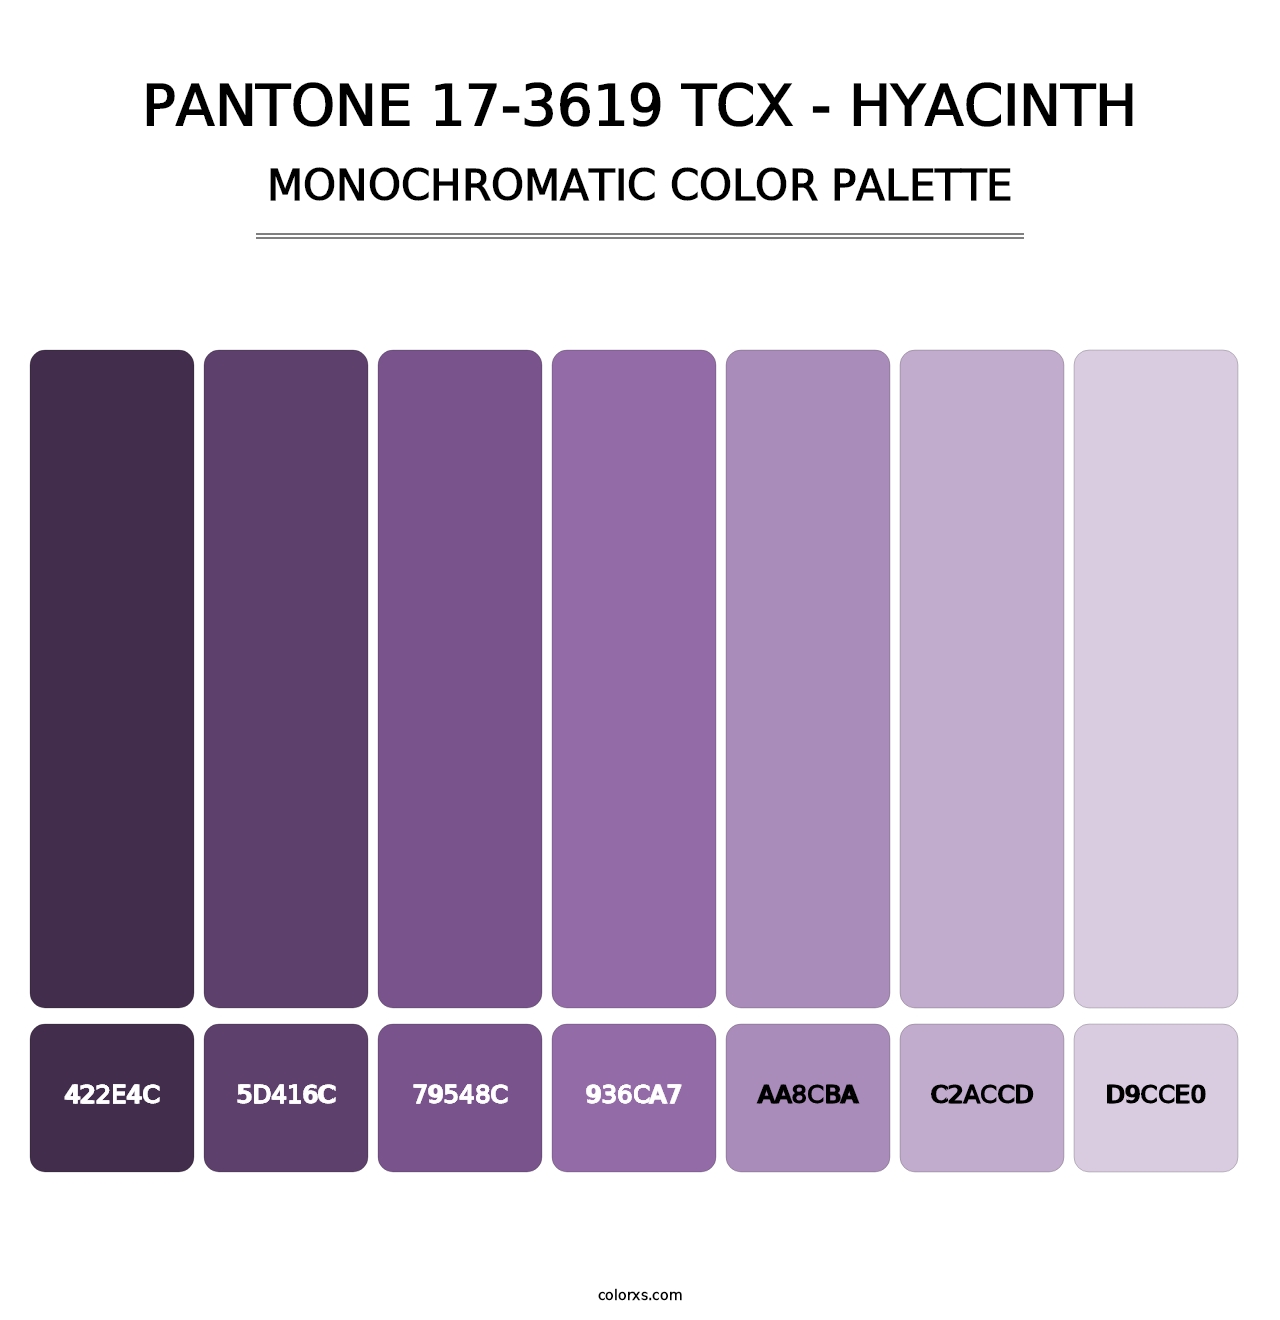 PANTONE 17-3619 TCX - Hyacinth - Monochromatic Color Palette